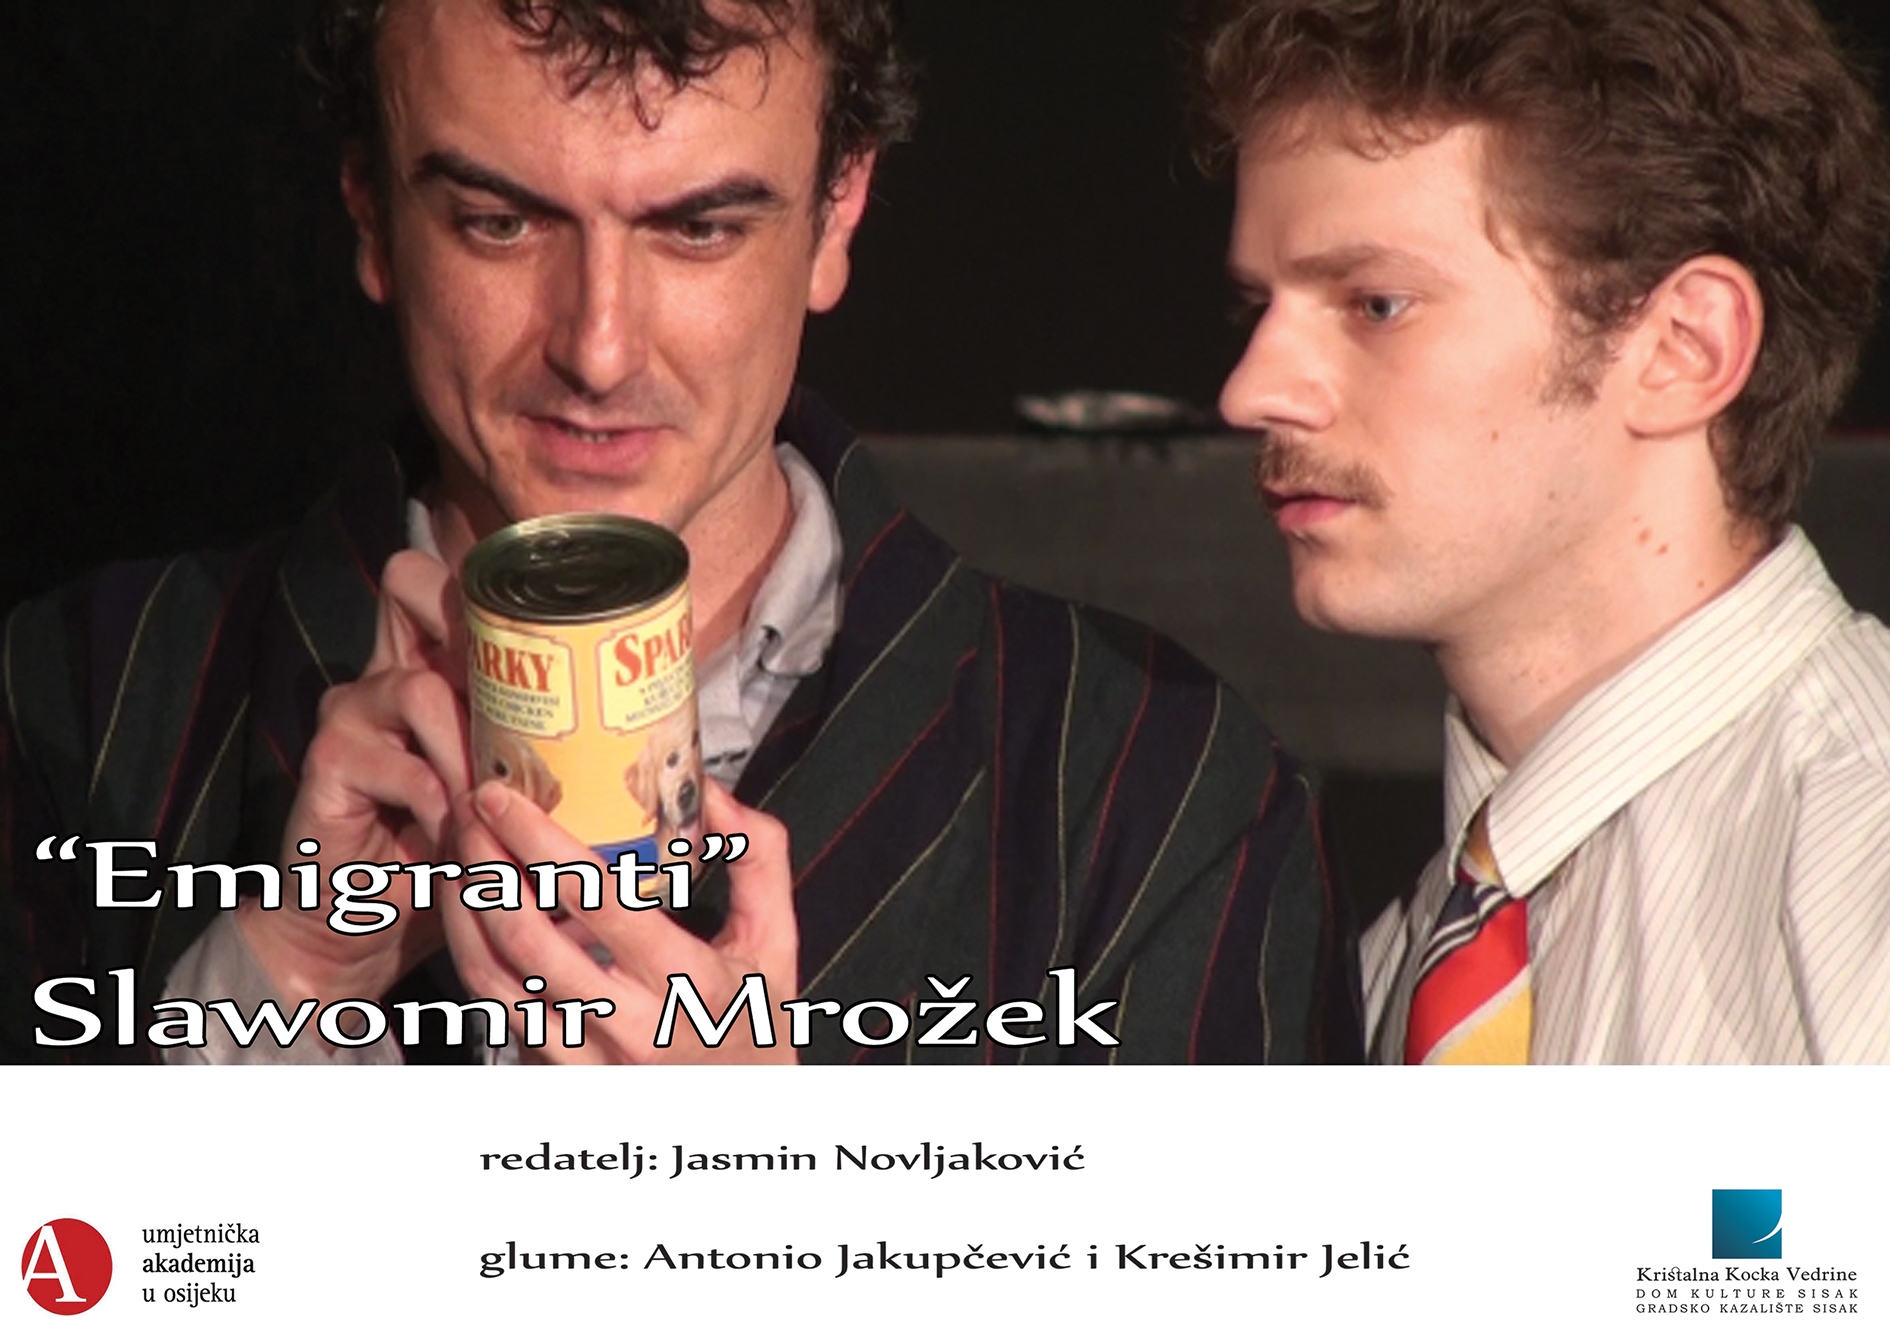 You are currently viewing “Emigranti” redatelja Jasmina Novljakovića na daskama Kazališta 21